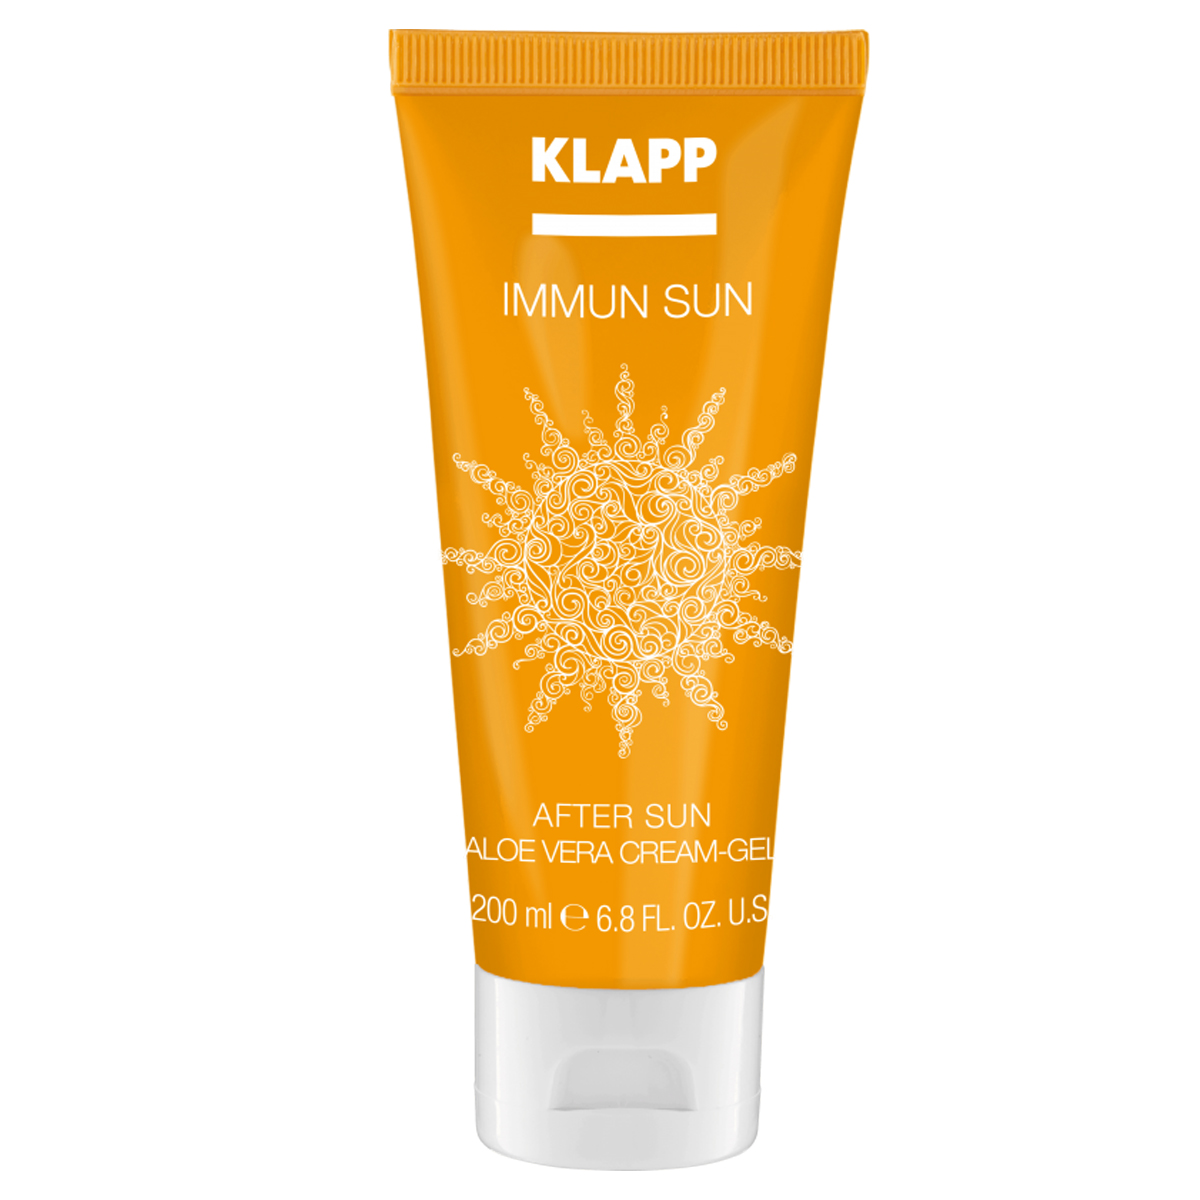 KLAPP Immun Sun After Sun Aloe Vera Cream Gel 200 ml